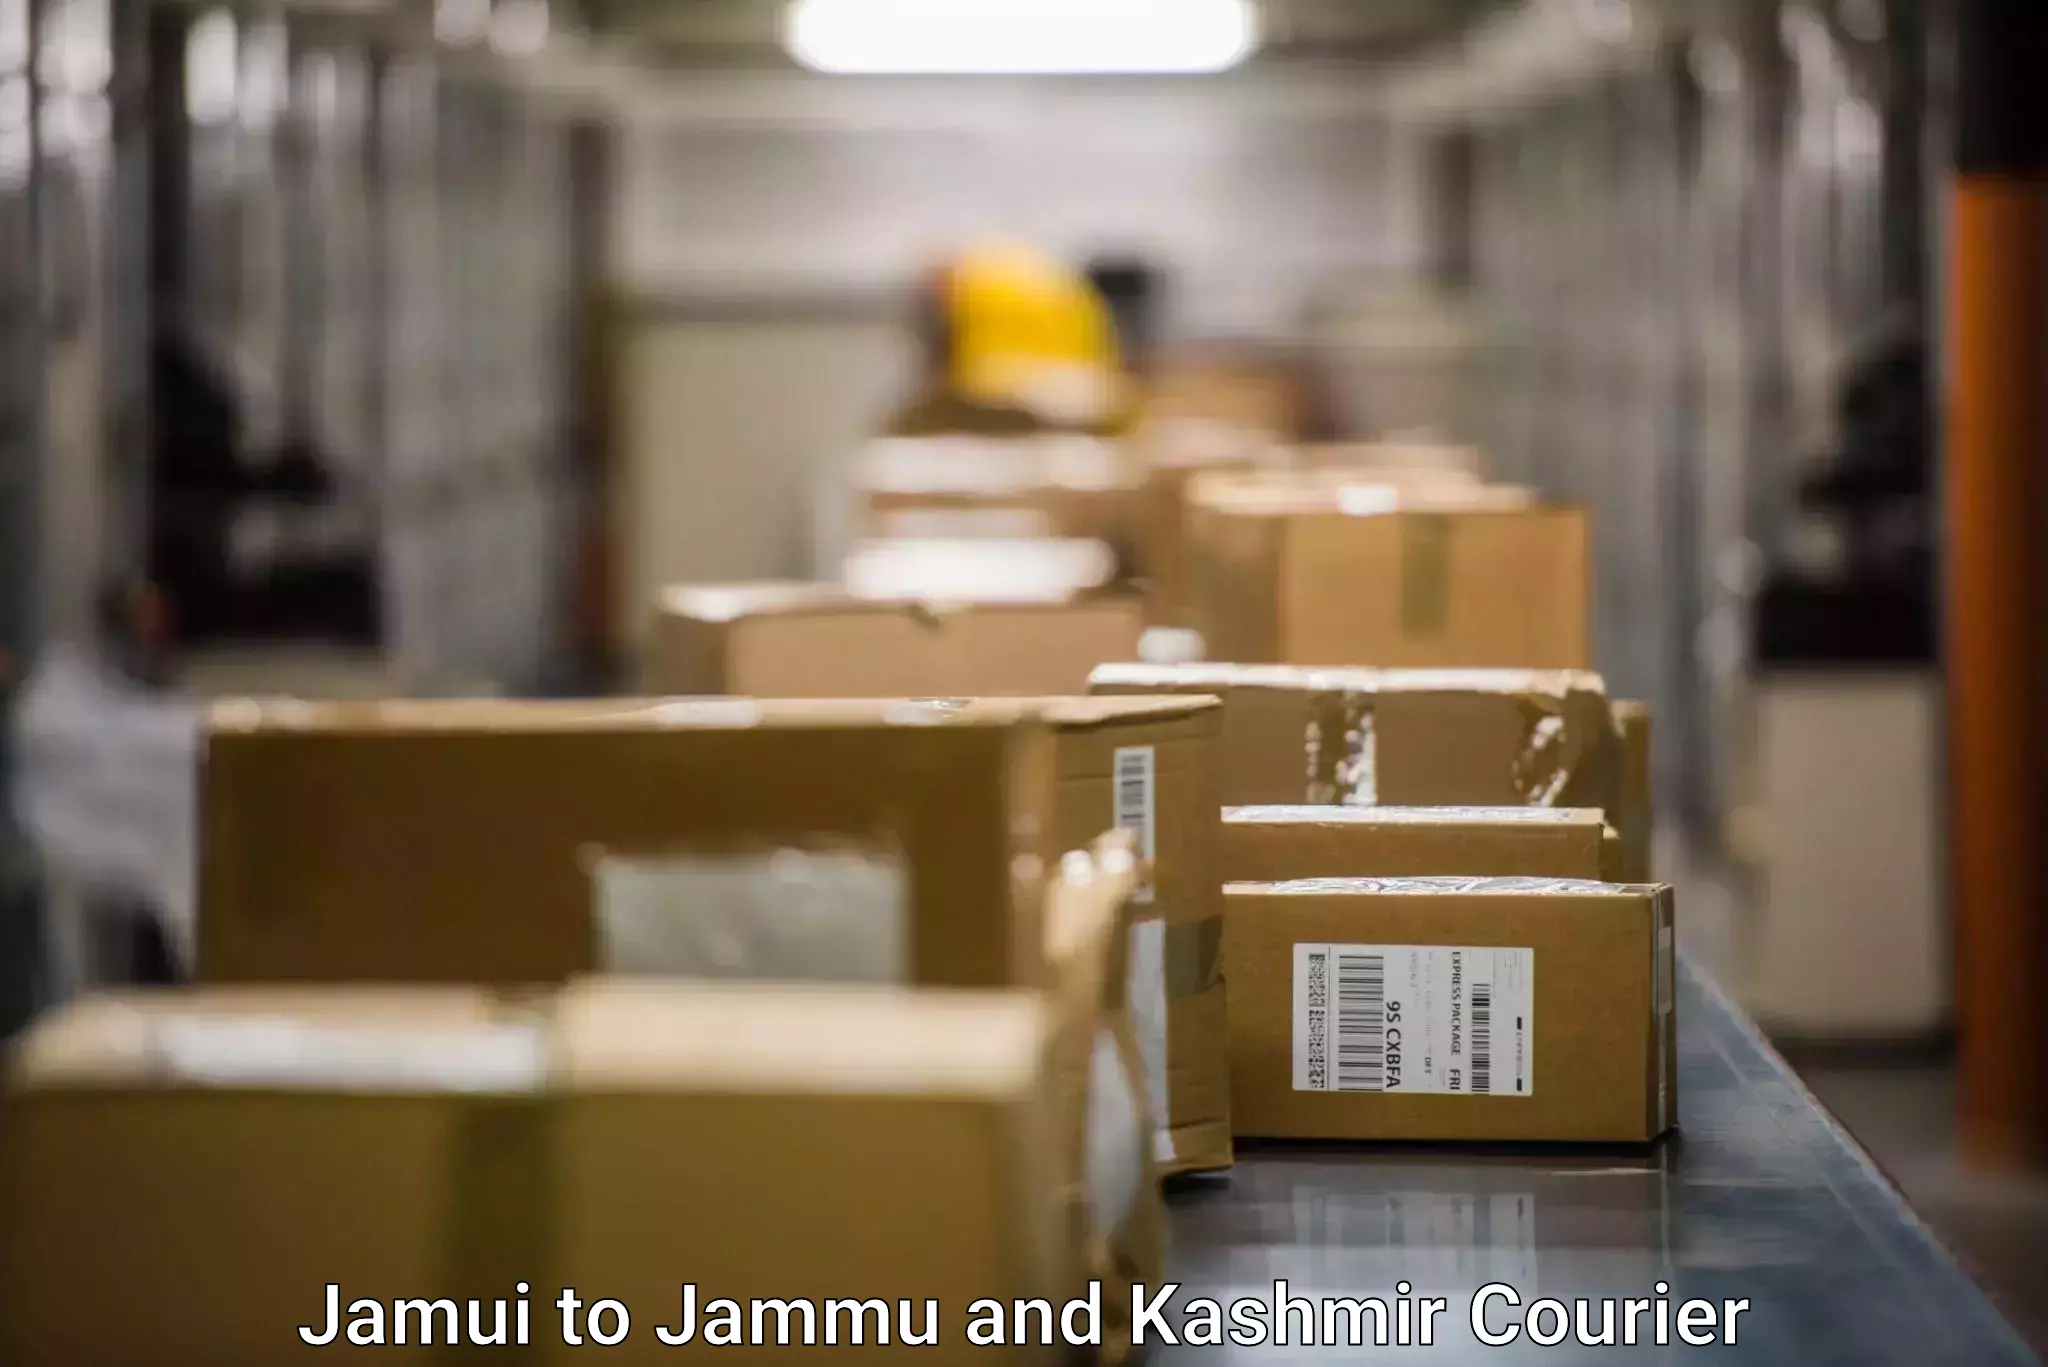 Express mail solutions Jamui to Jammu and Kashmir